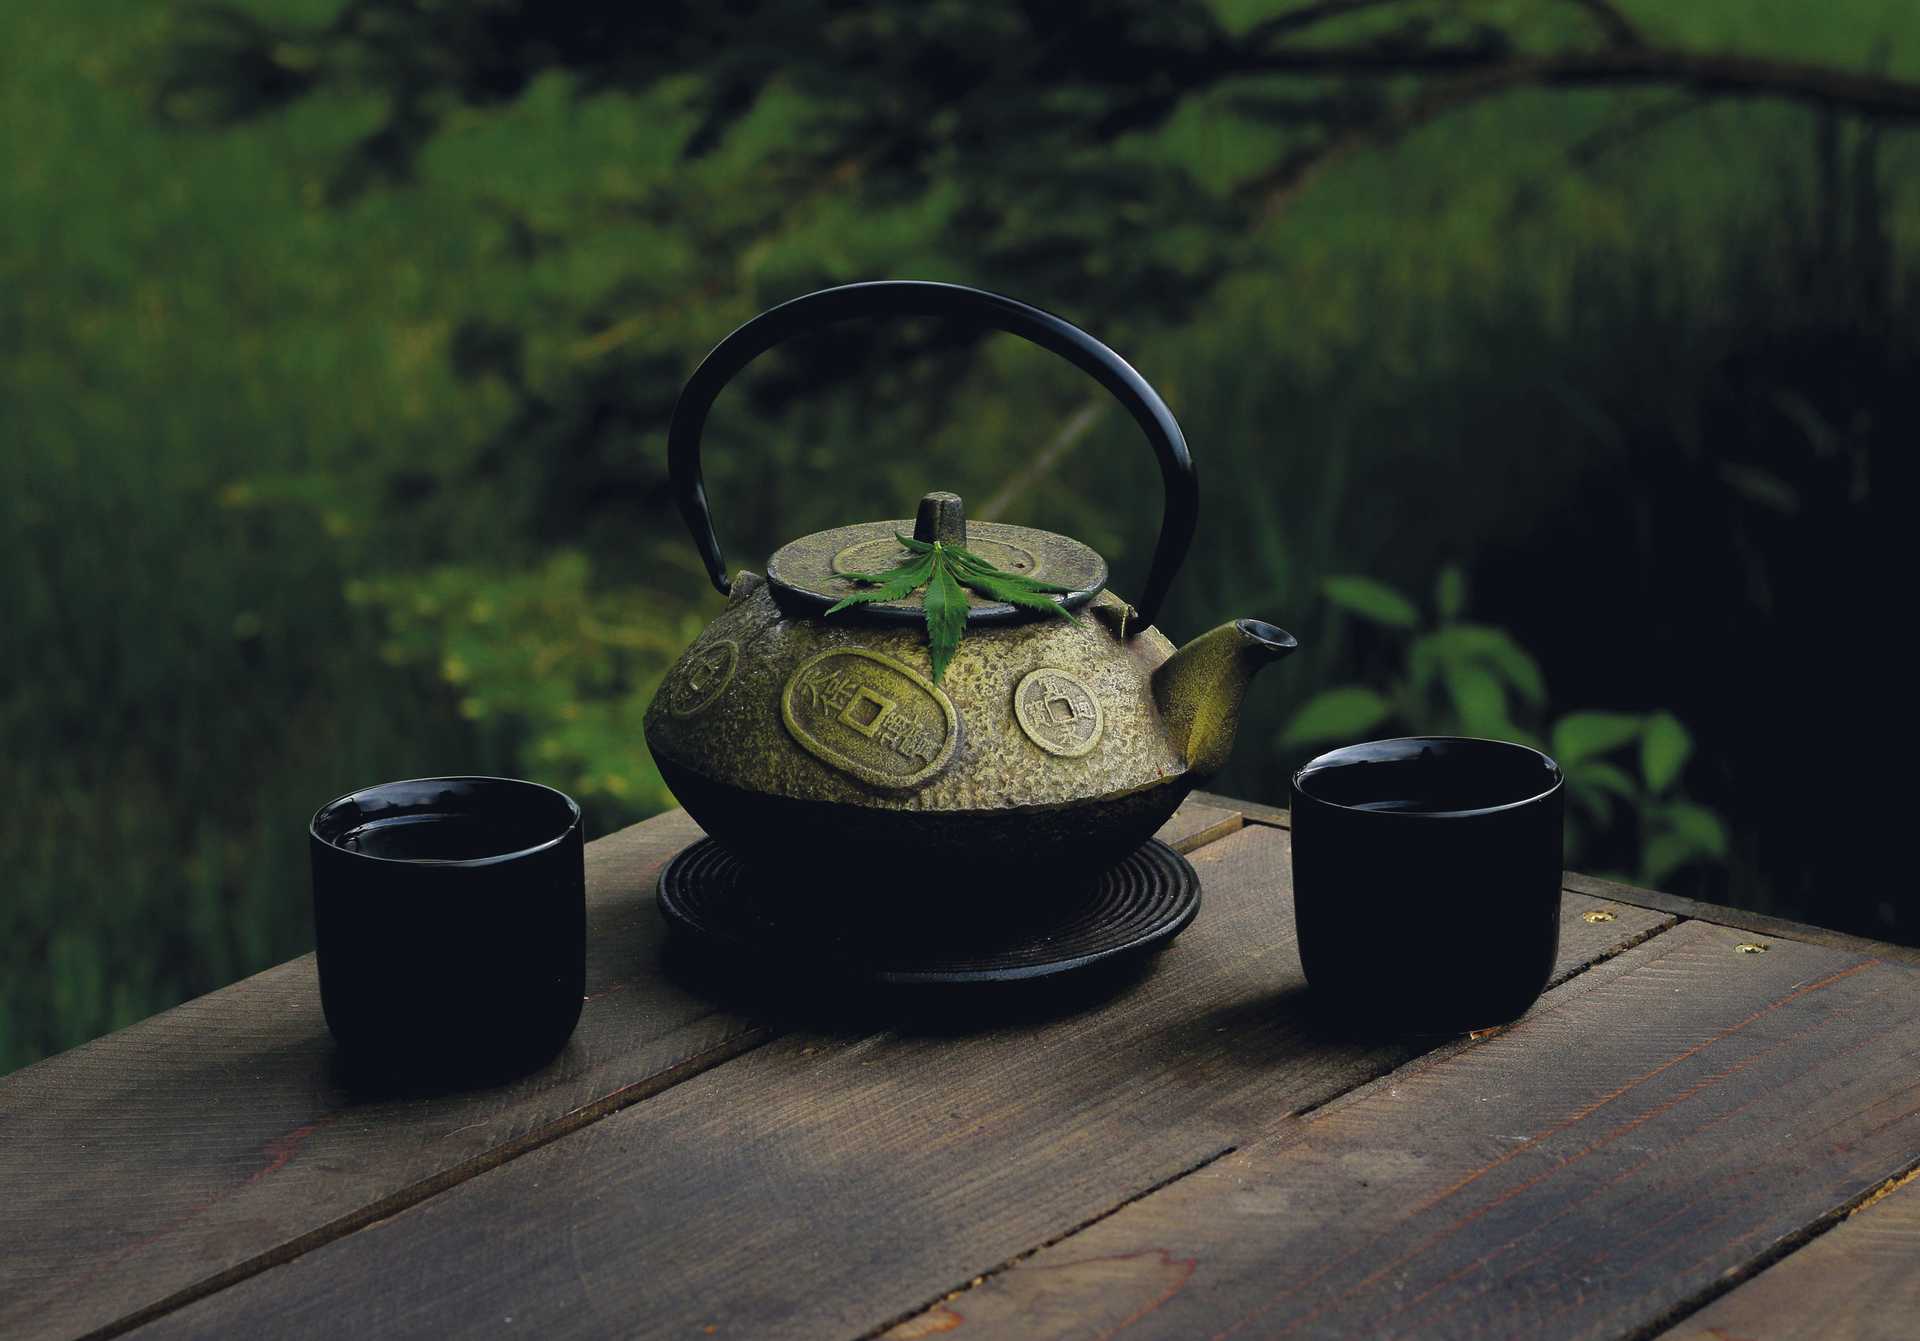 Hemp leaf on a tea pot